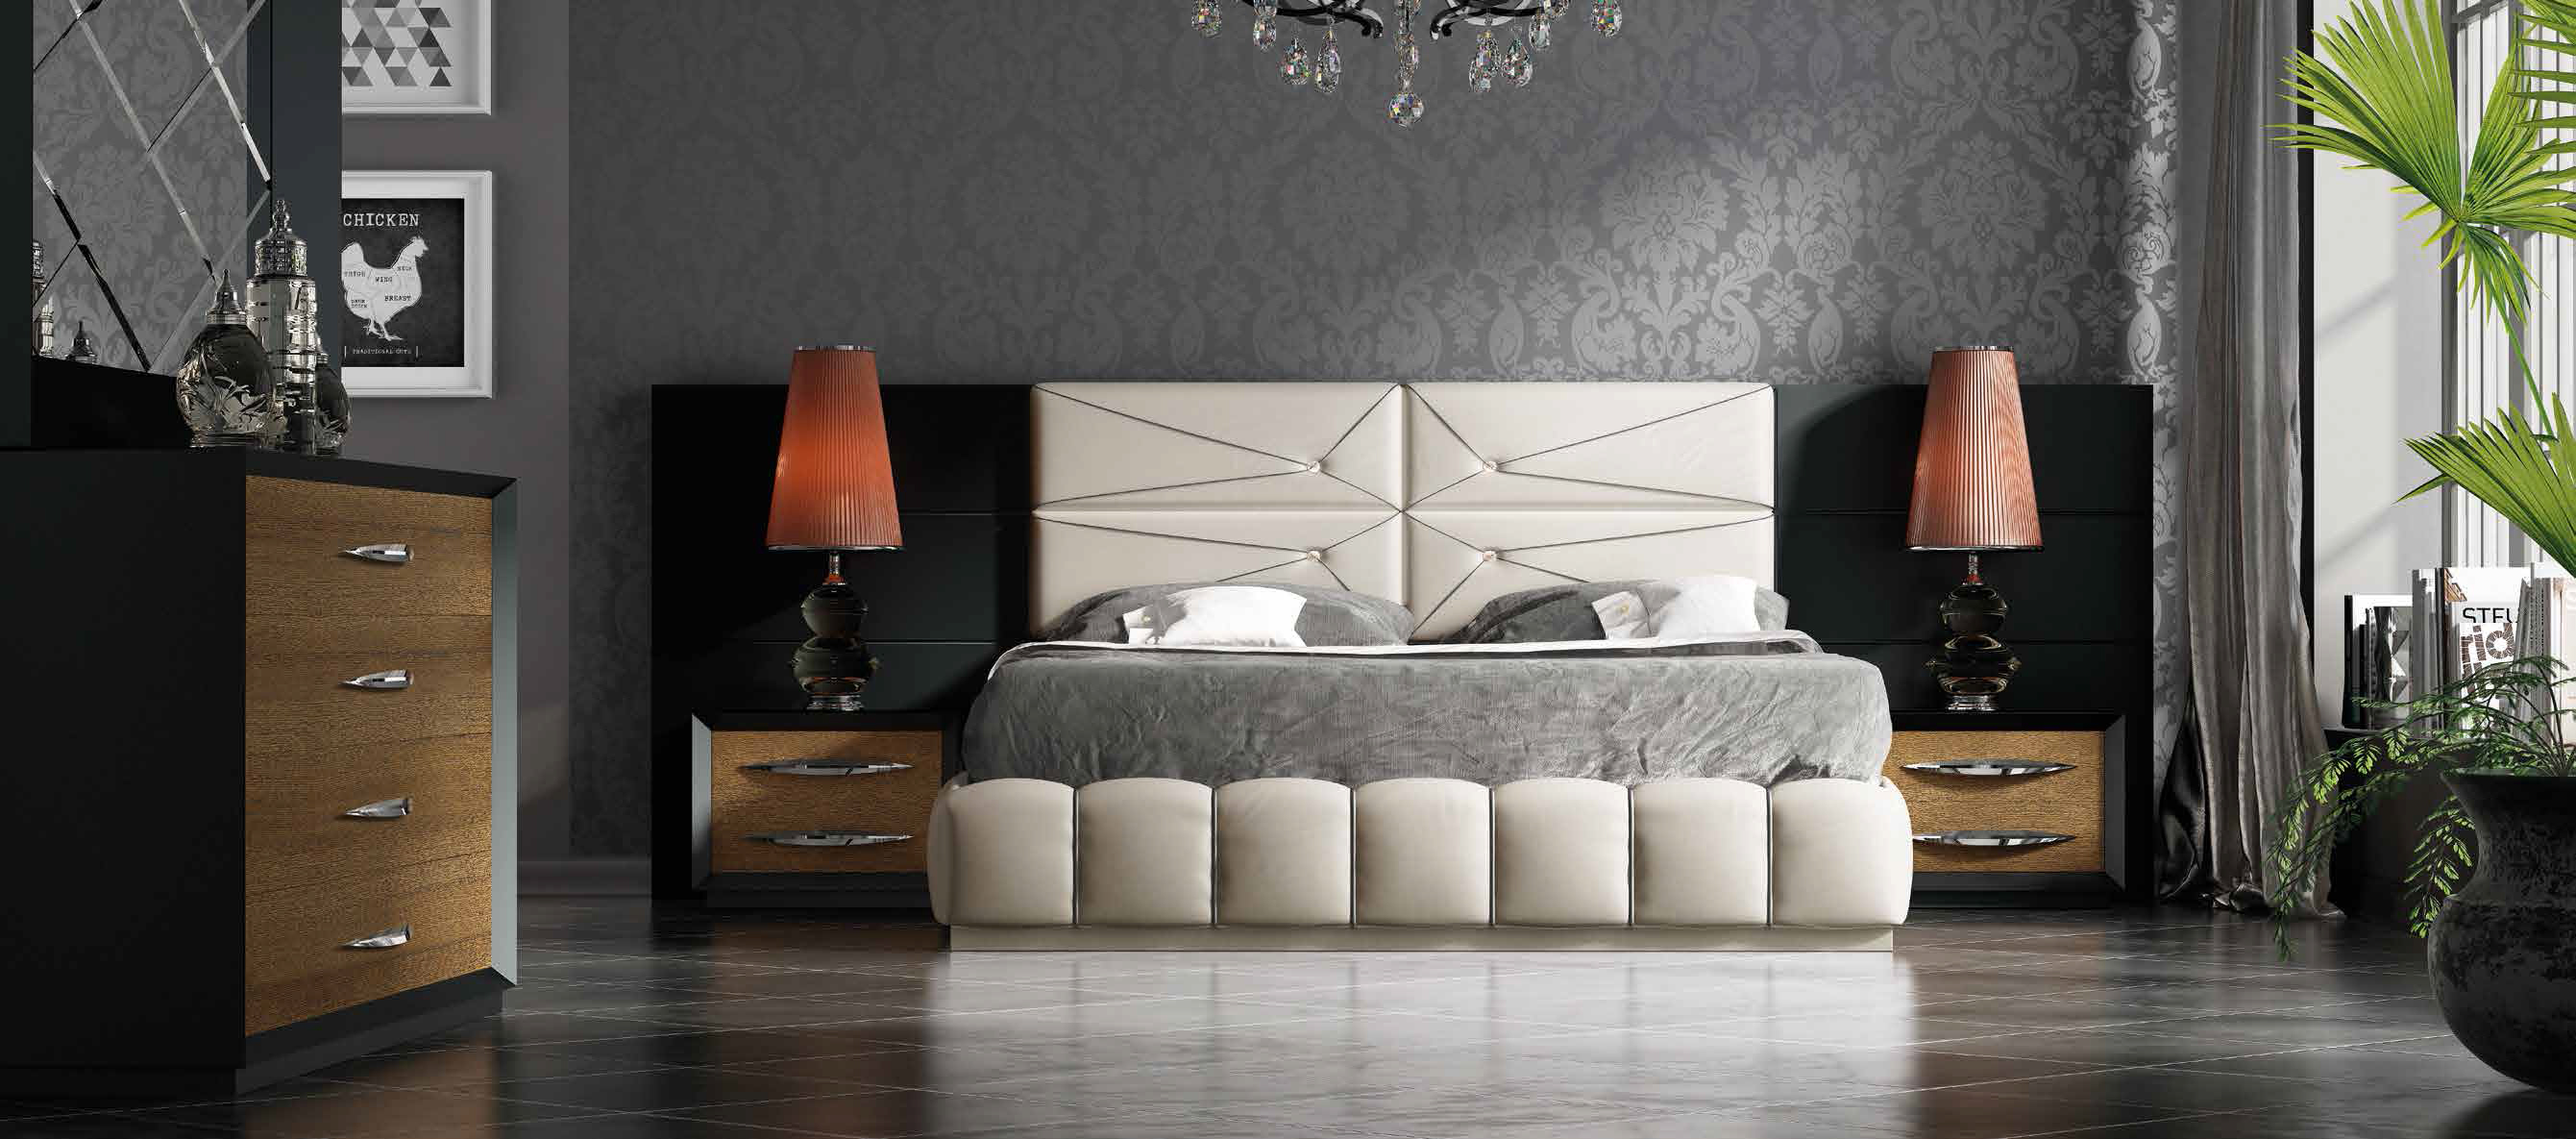 Brands Franco Furniture Bedrooms vol3, Spain DOR 72